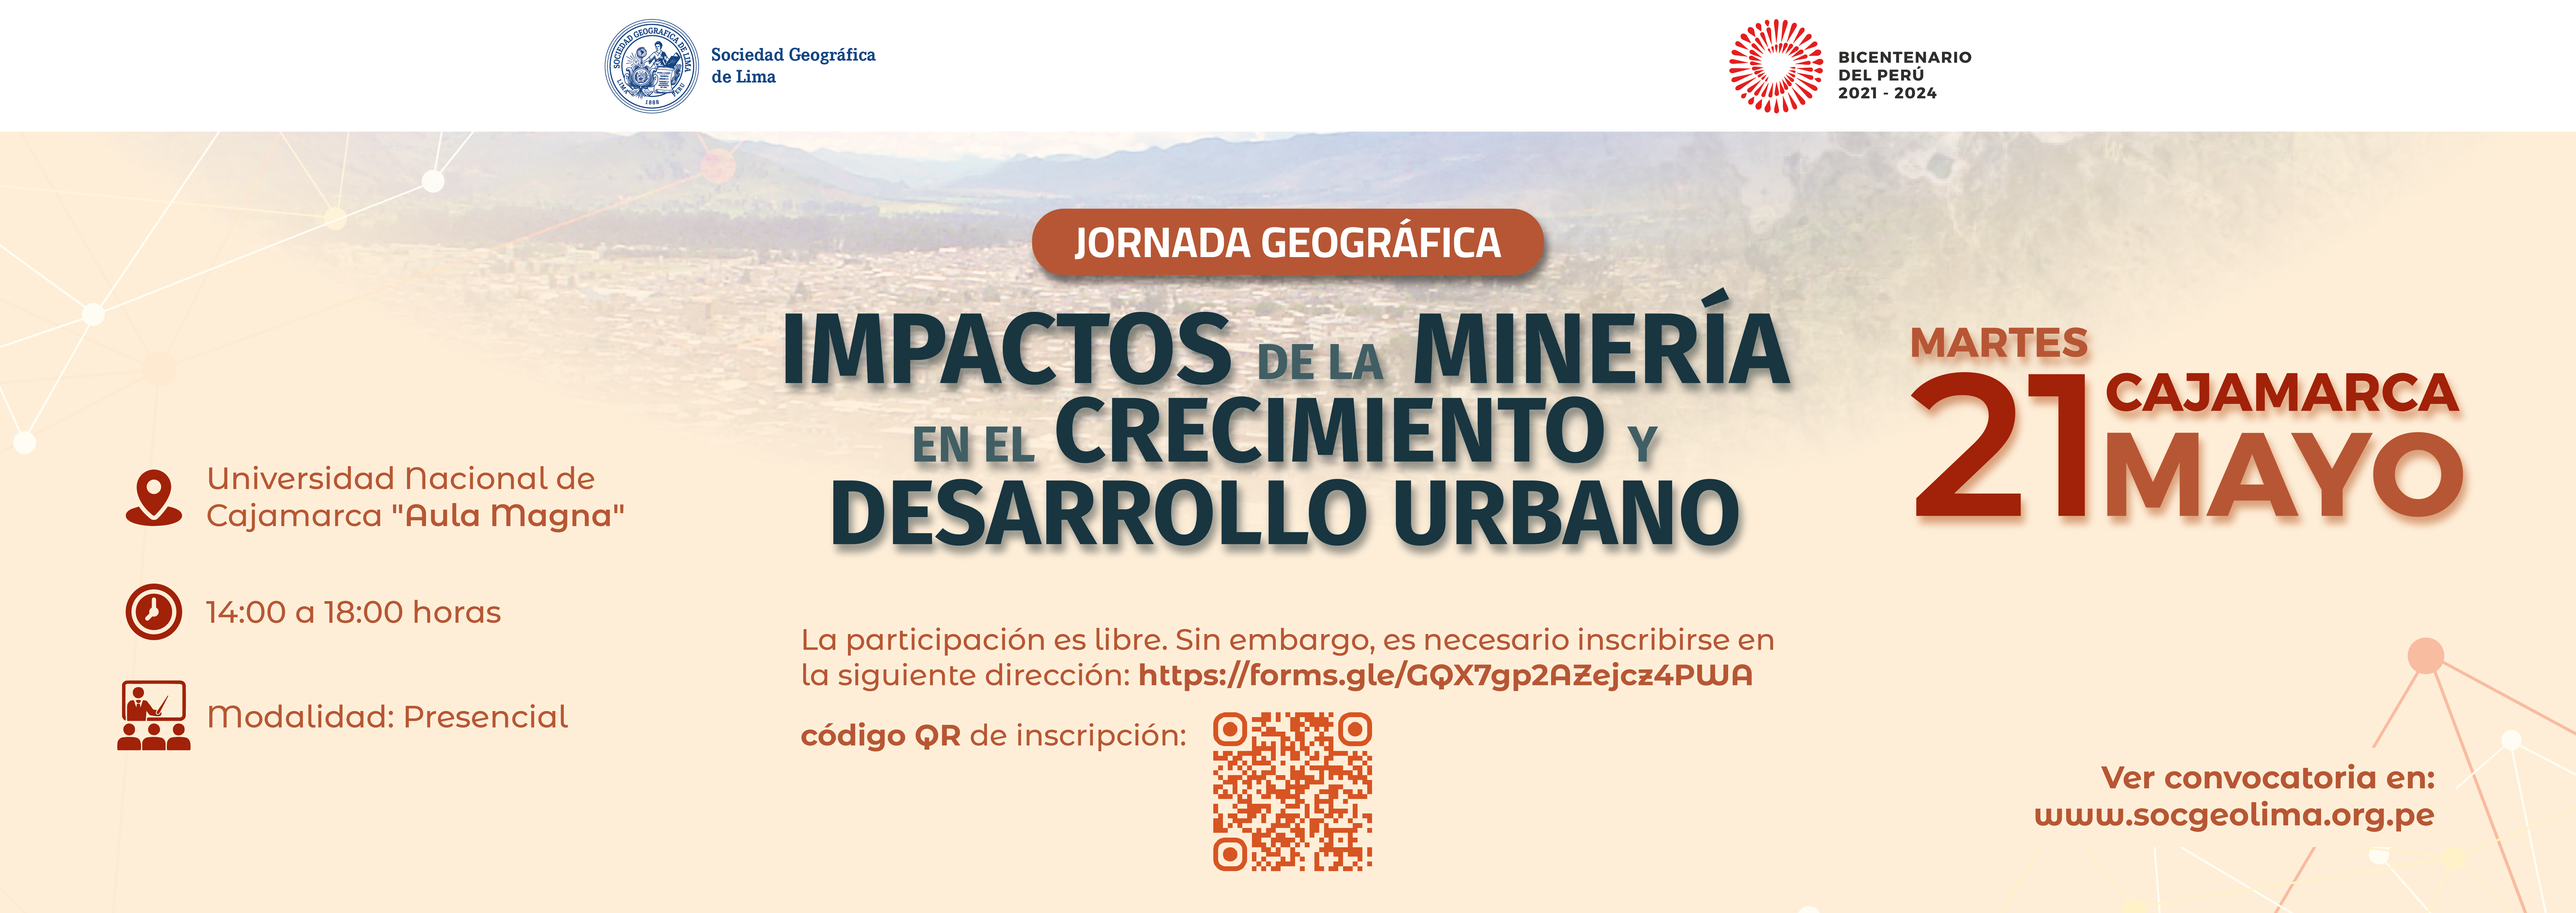 jornada geografica_cajamarca - BANNER WEB